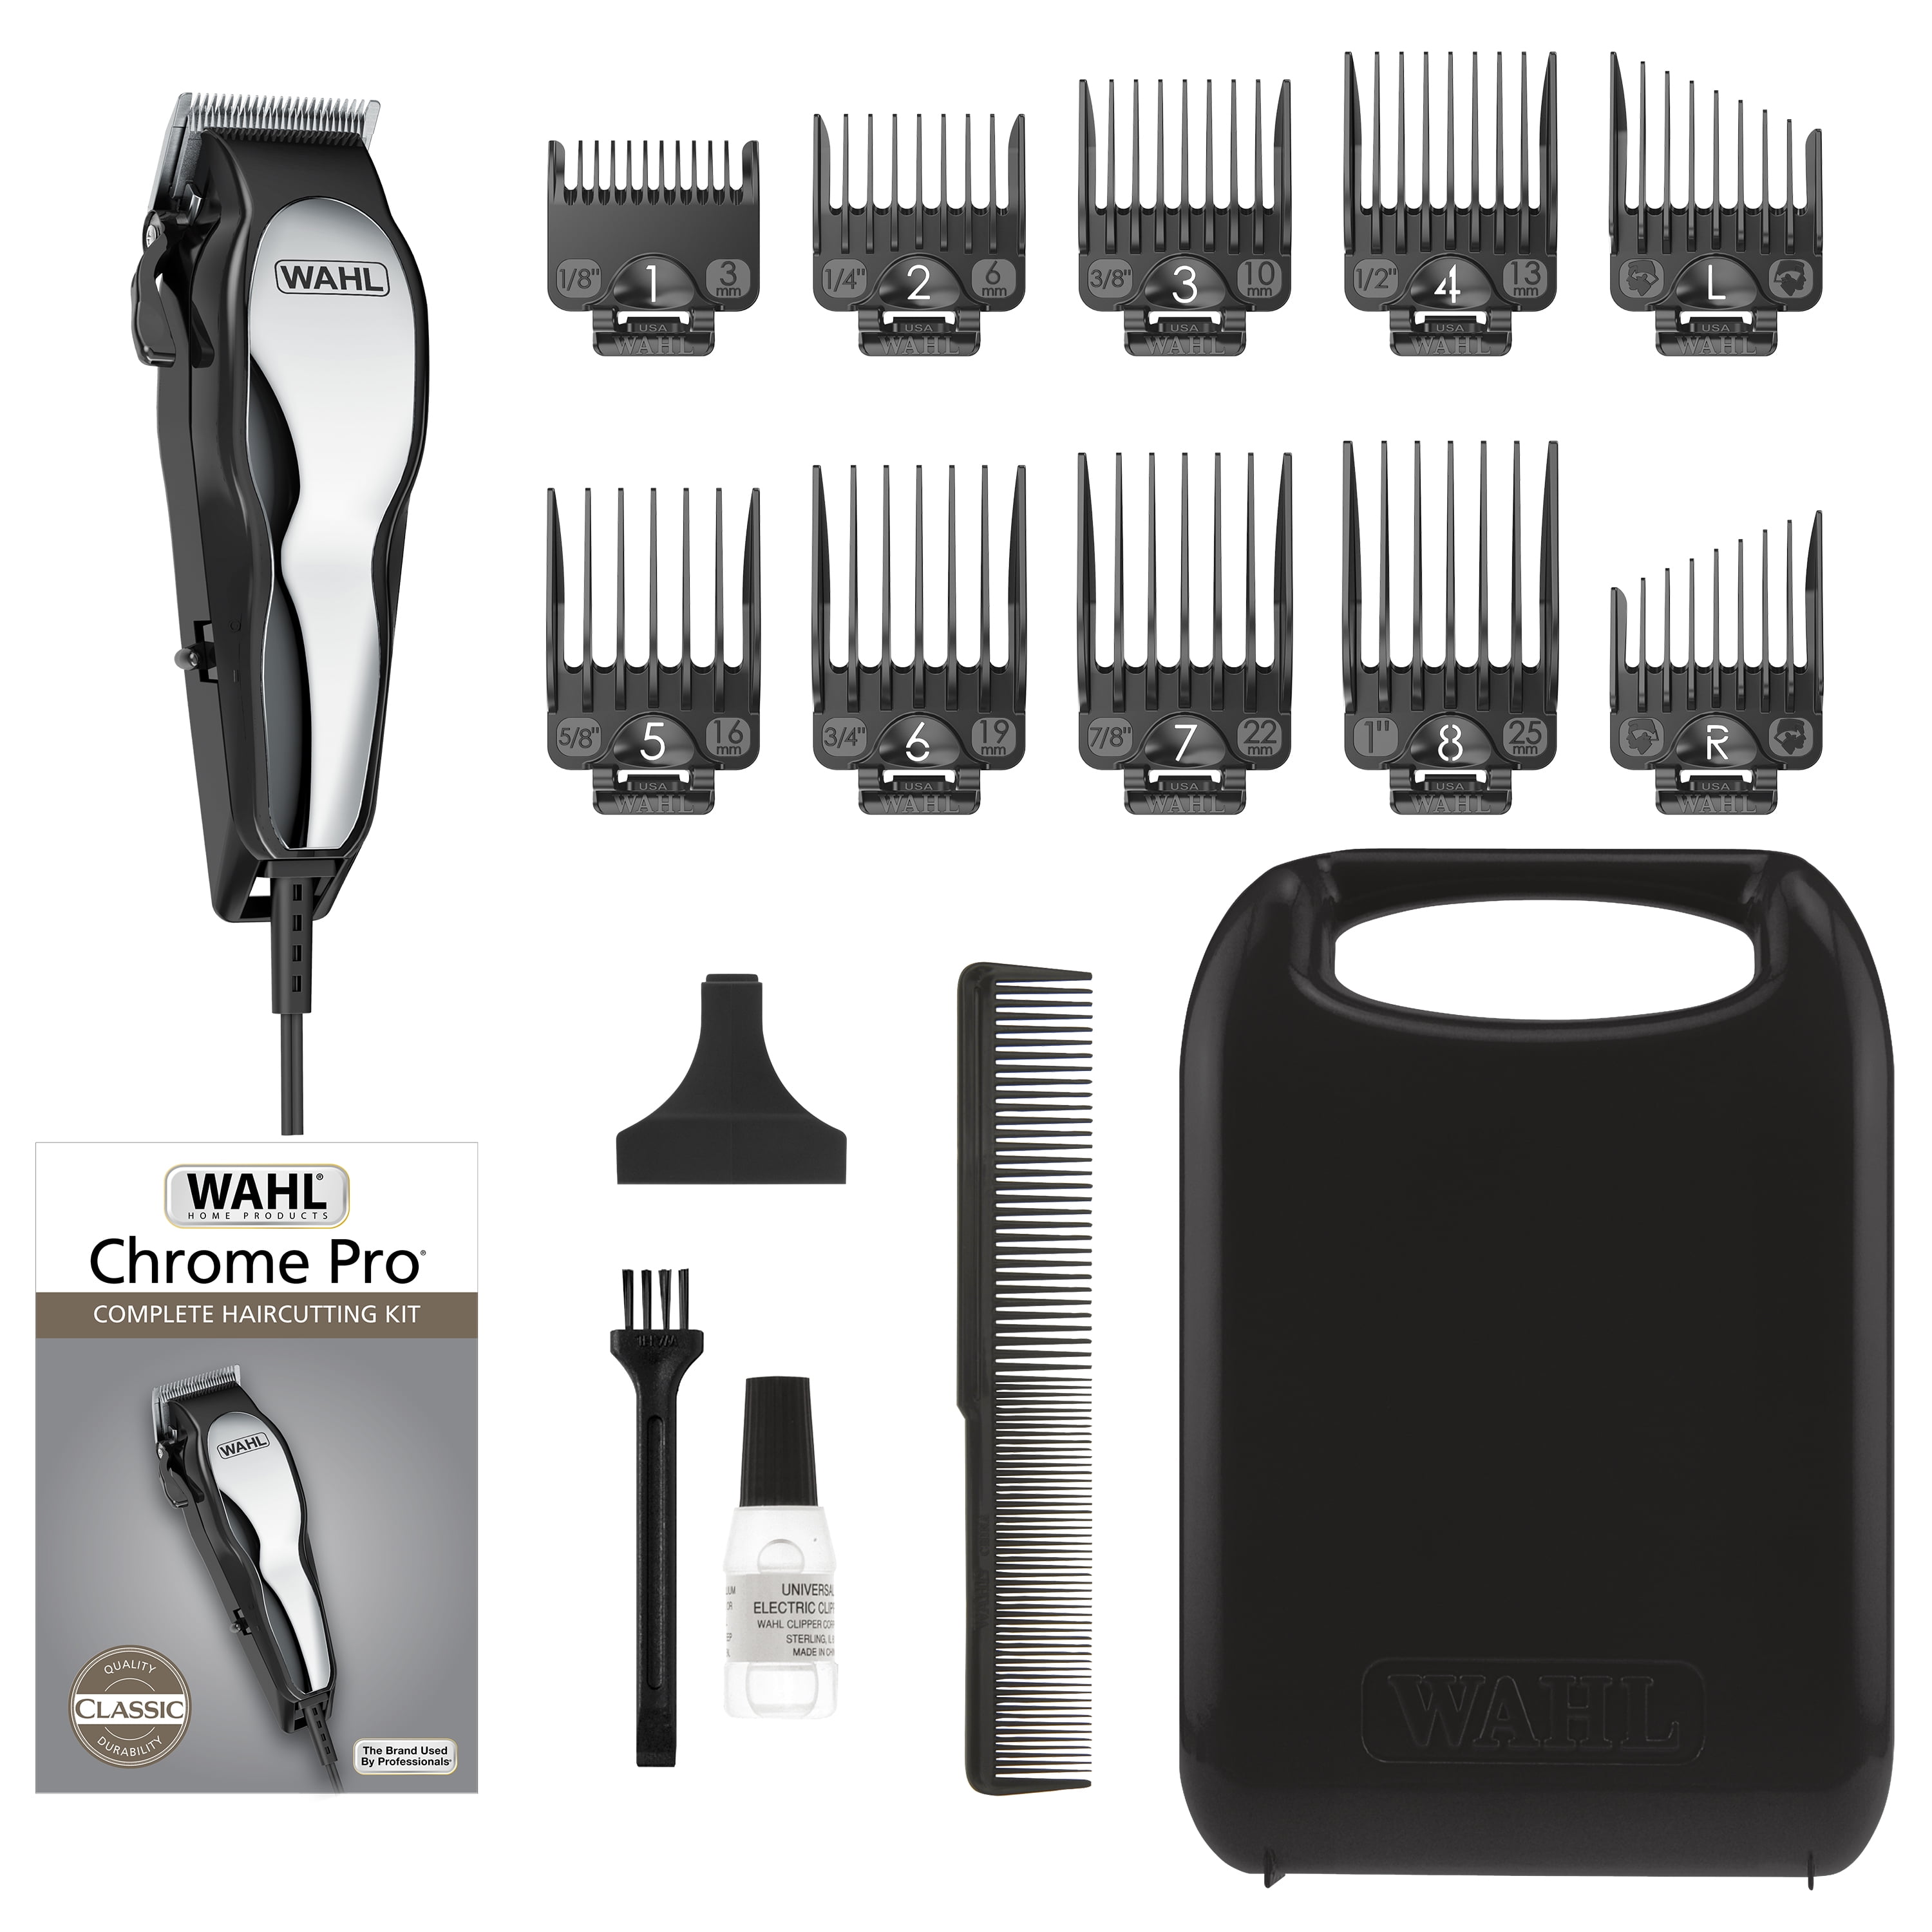 Mathis eksotisk Dræbte Wahl Chrome pro Haircutting Kit, Black/Chrome -79730T - Walmart.com